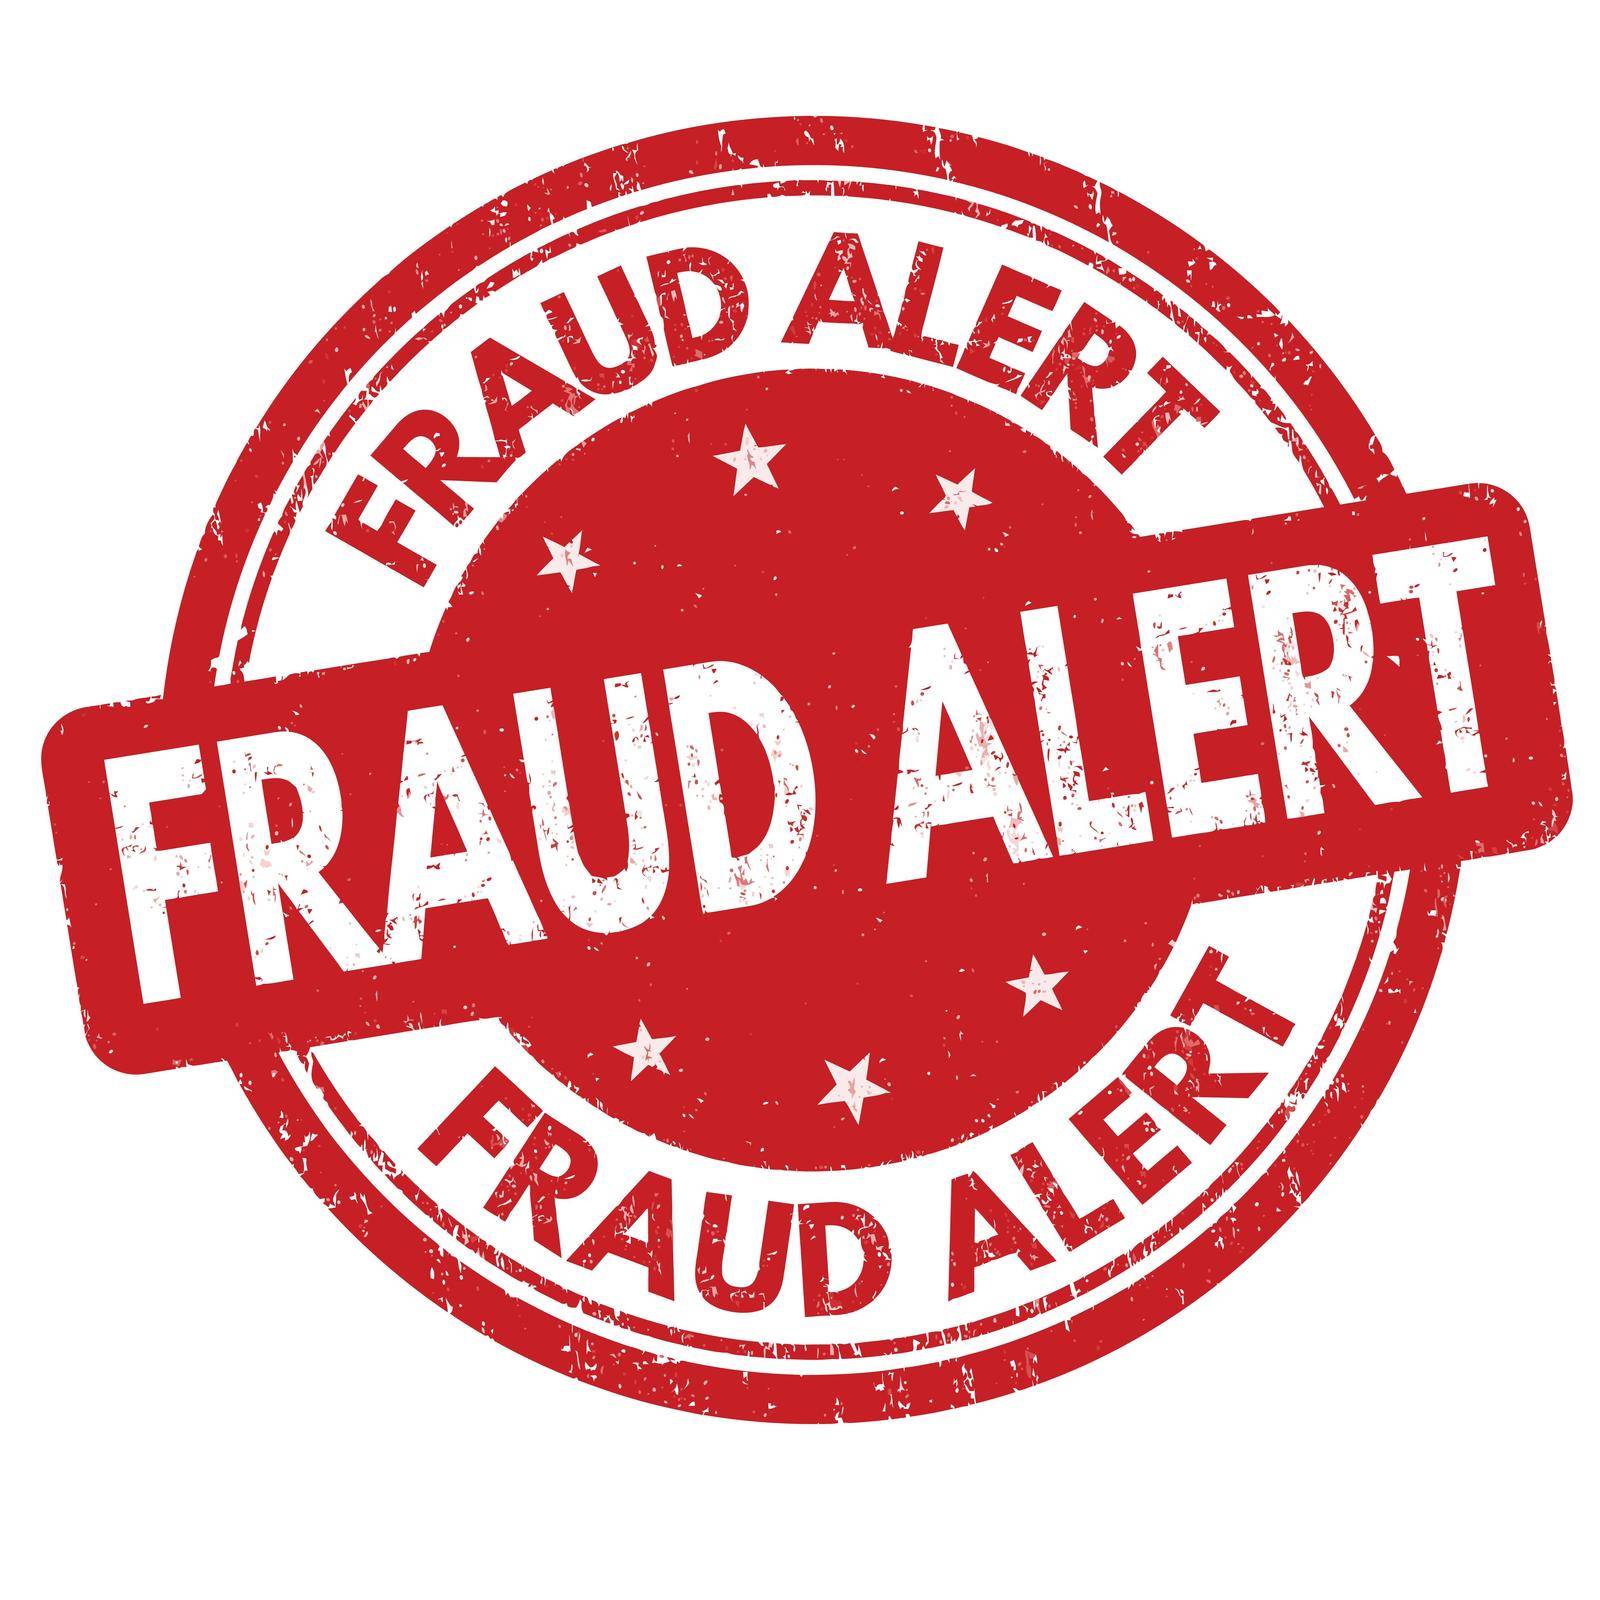 Fraud alert grunge rubber stamp on white background, vector illustration